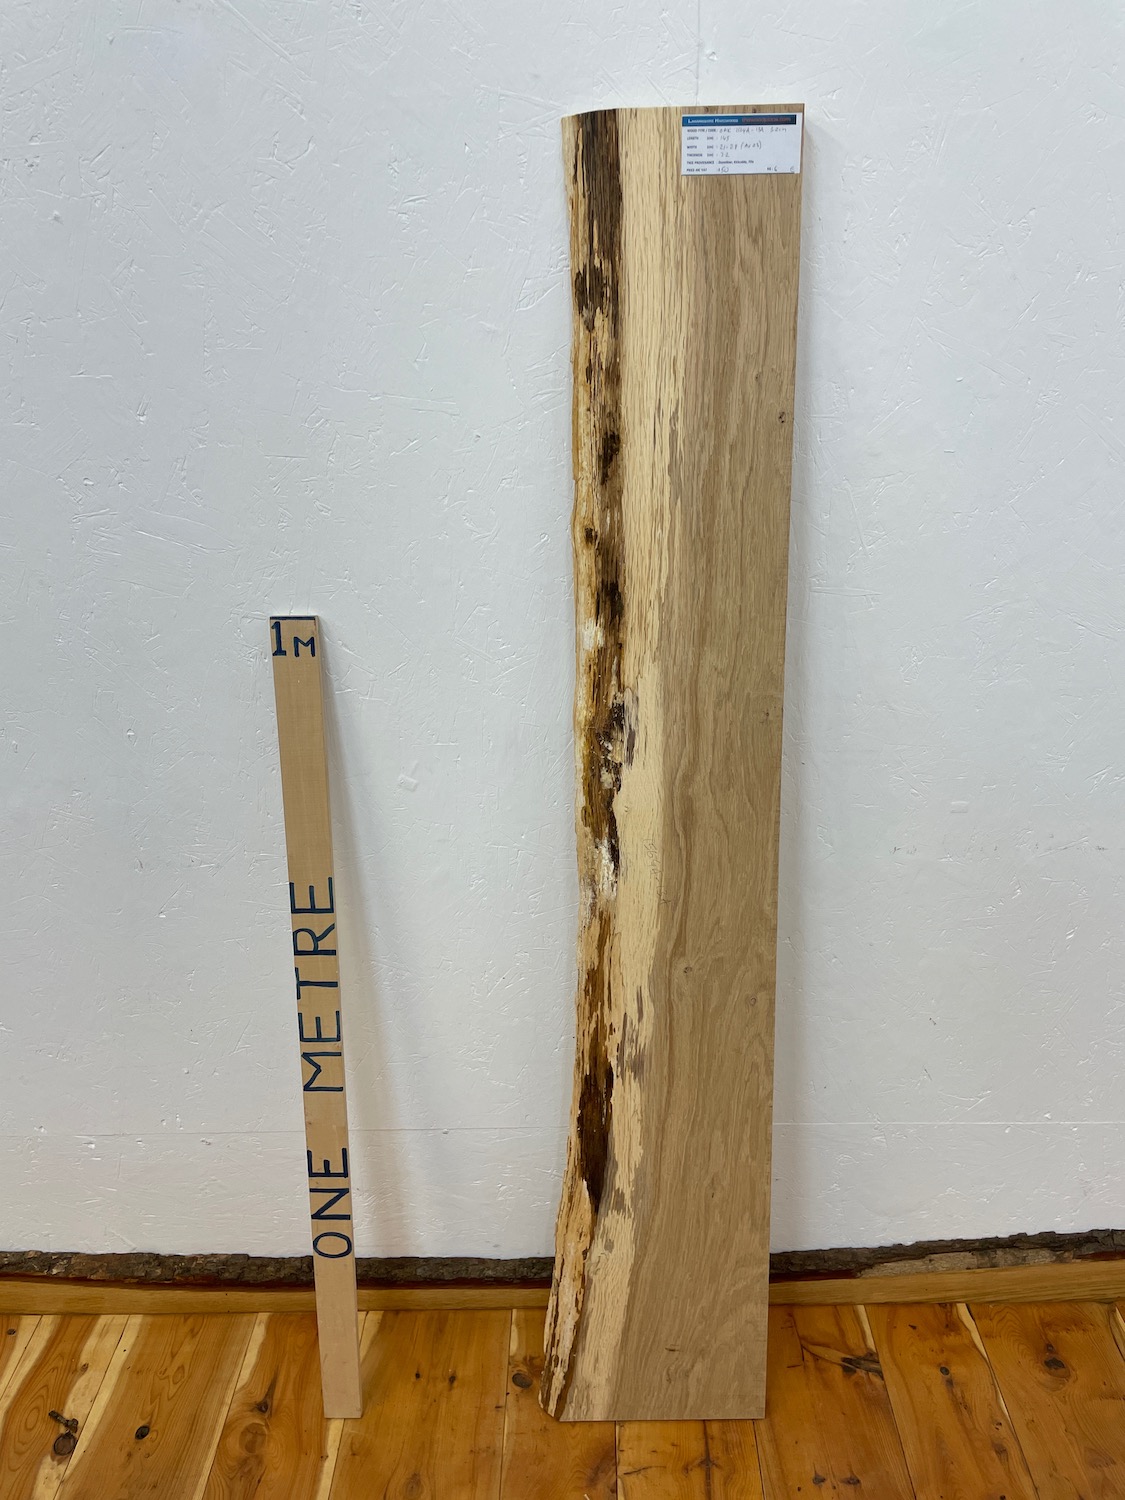 OAK Single Waney Natural Edge Board 1564A-13A Thickness 3.2cm Kiln Dried Planed & Thicknessed Seasoned Hardwood Live Edge Shelf